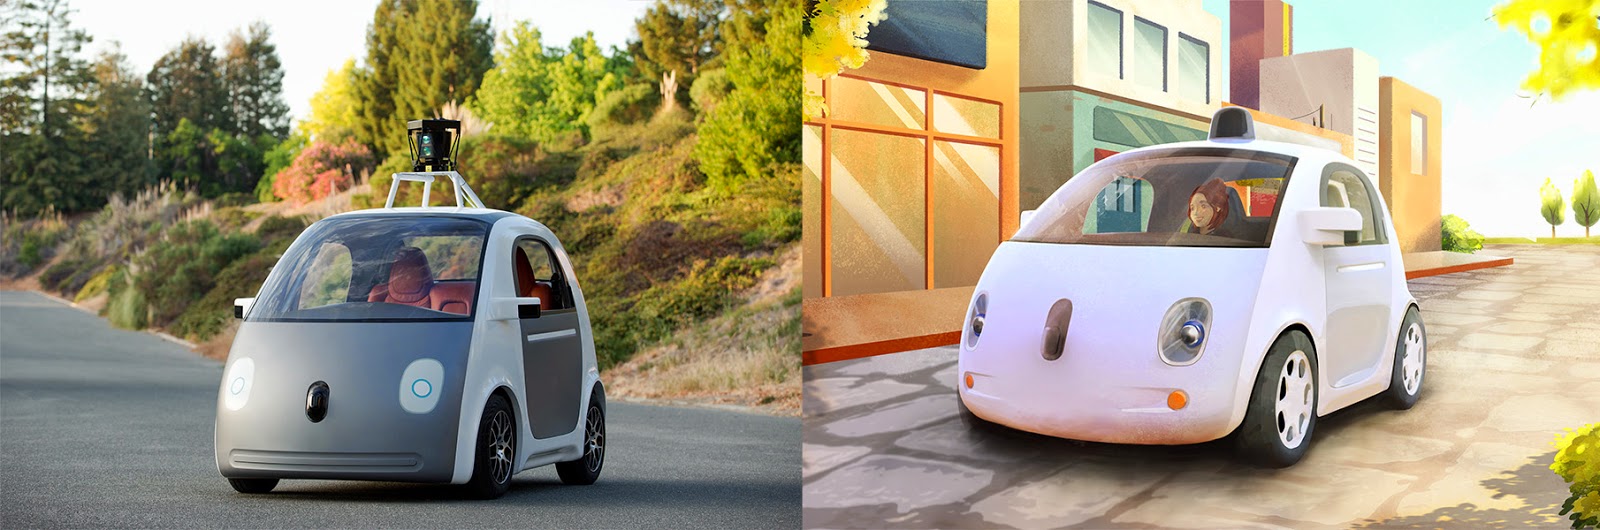 Google-car-prototype